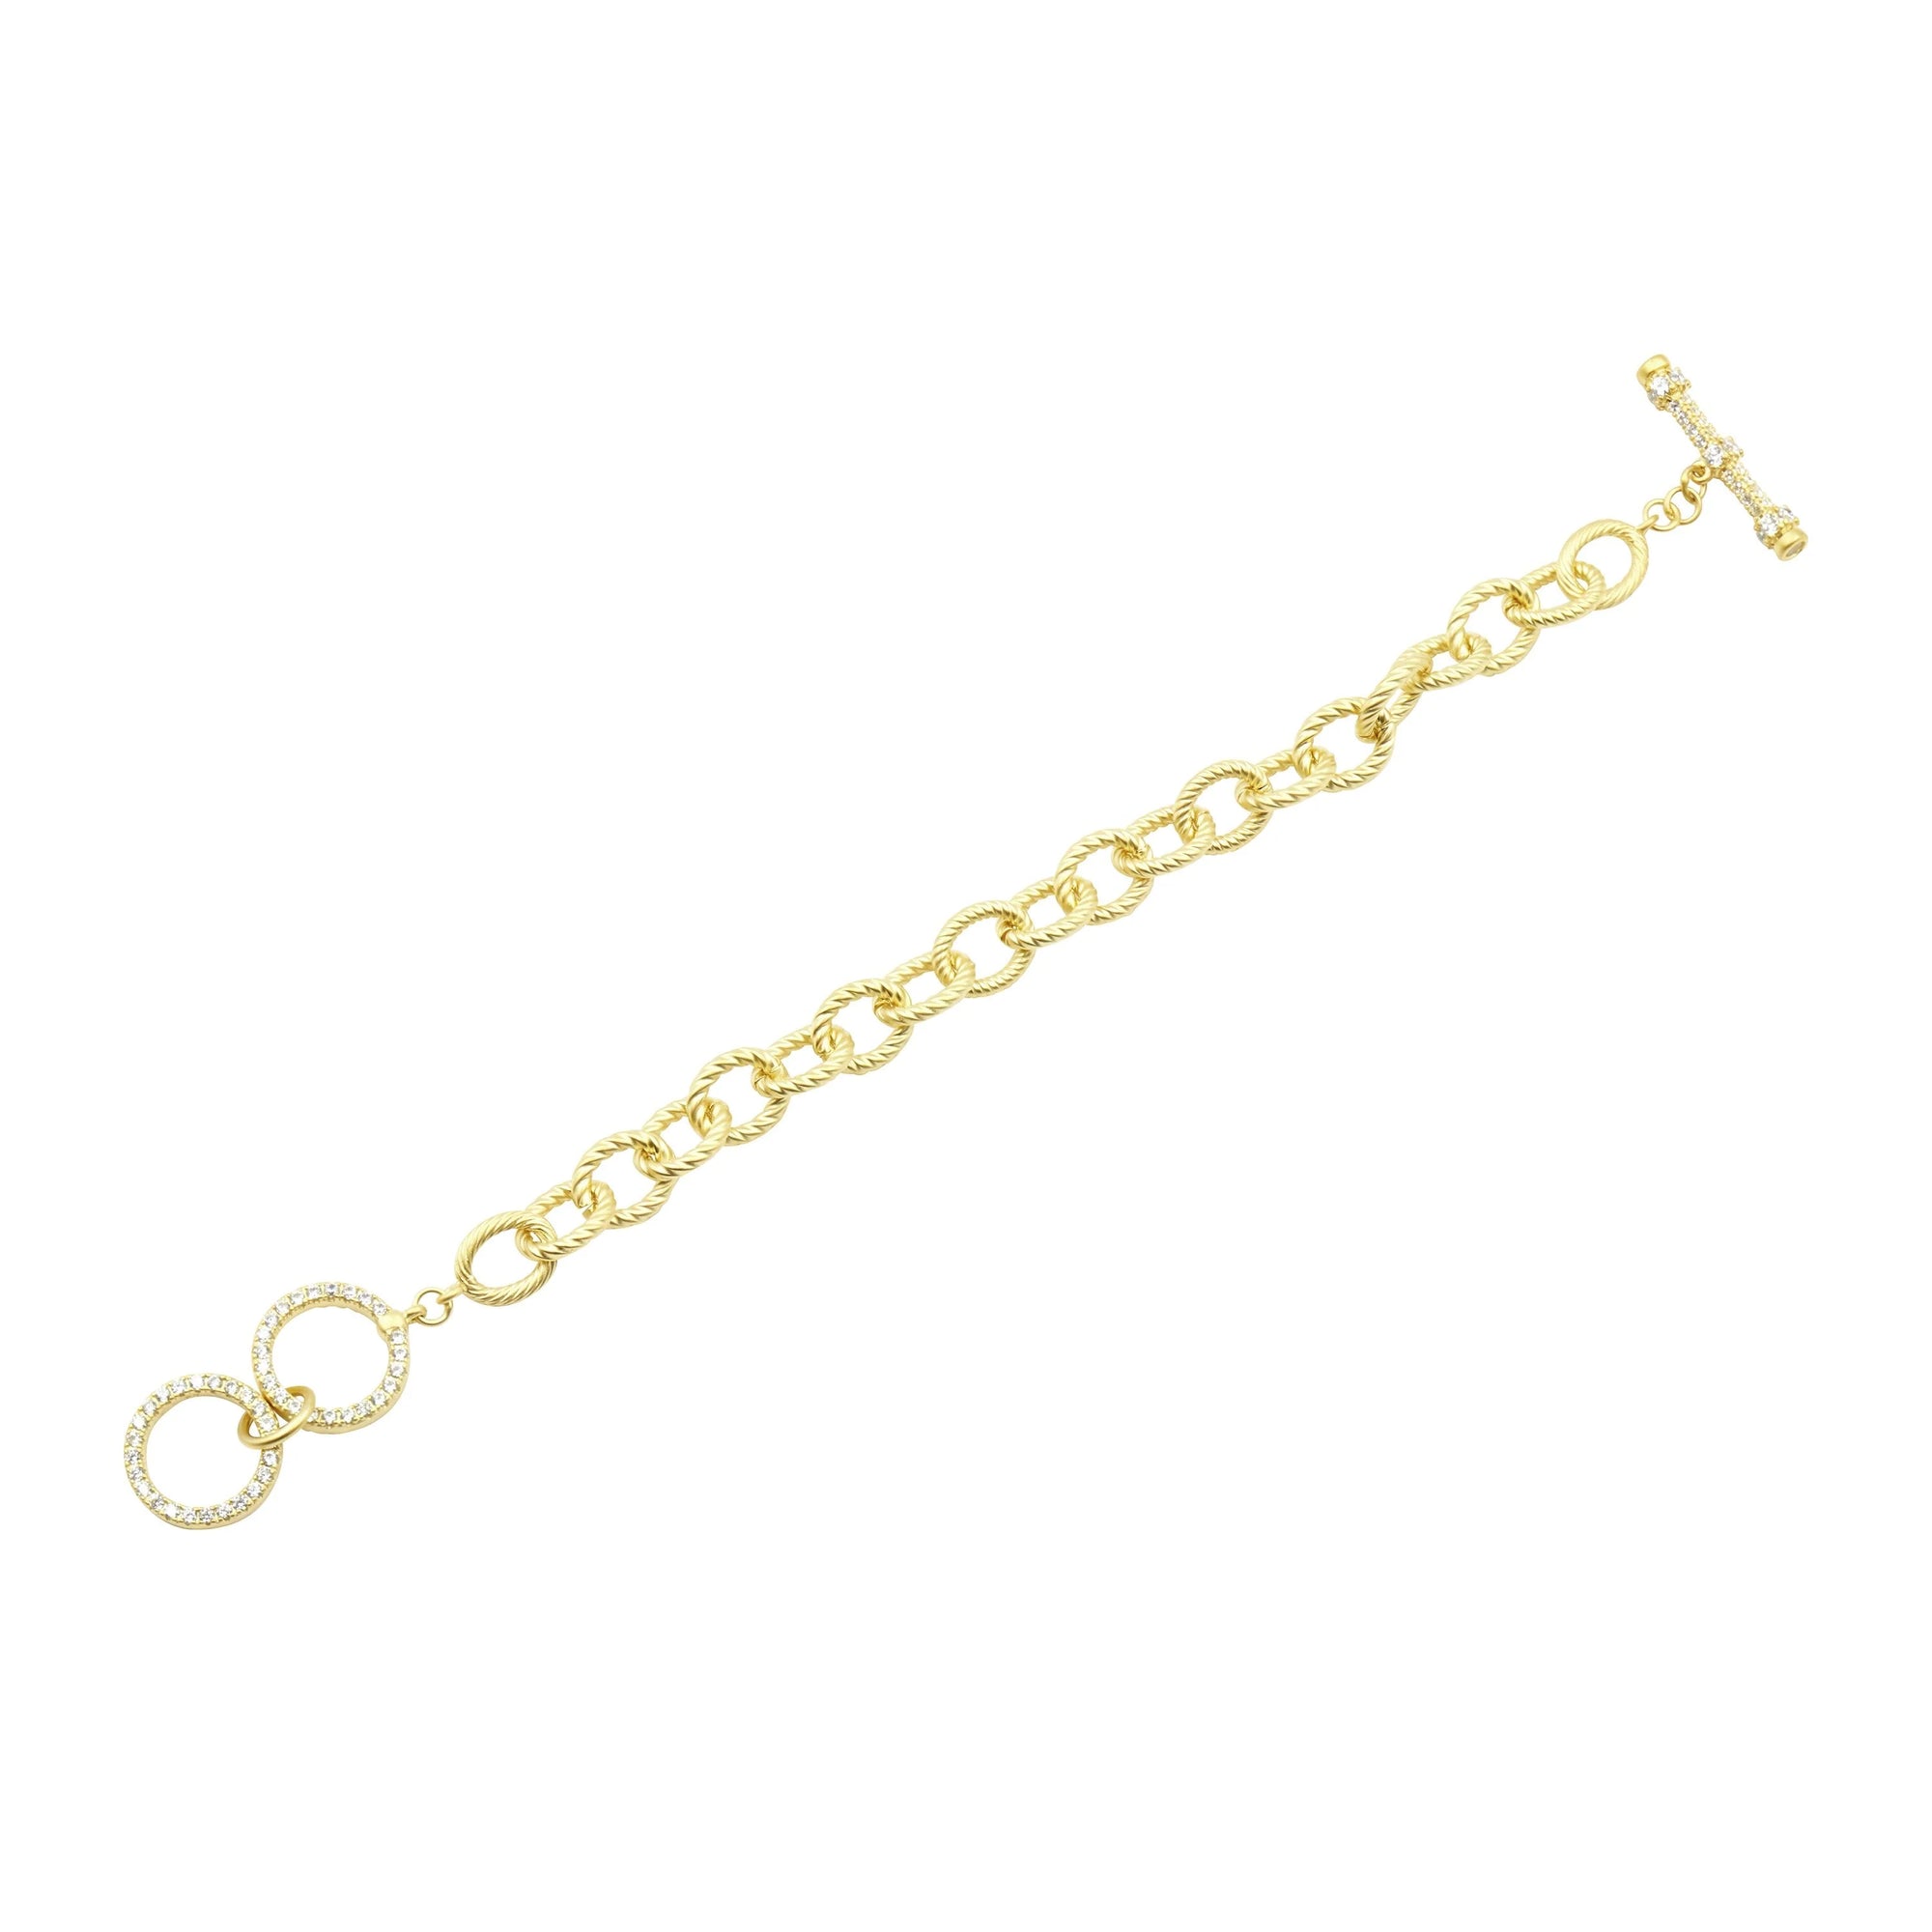 Freida Rothman "Harmony Golden Link Bracelet"